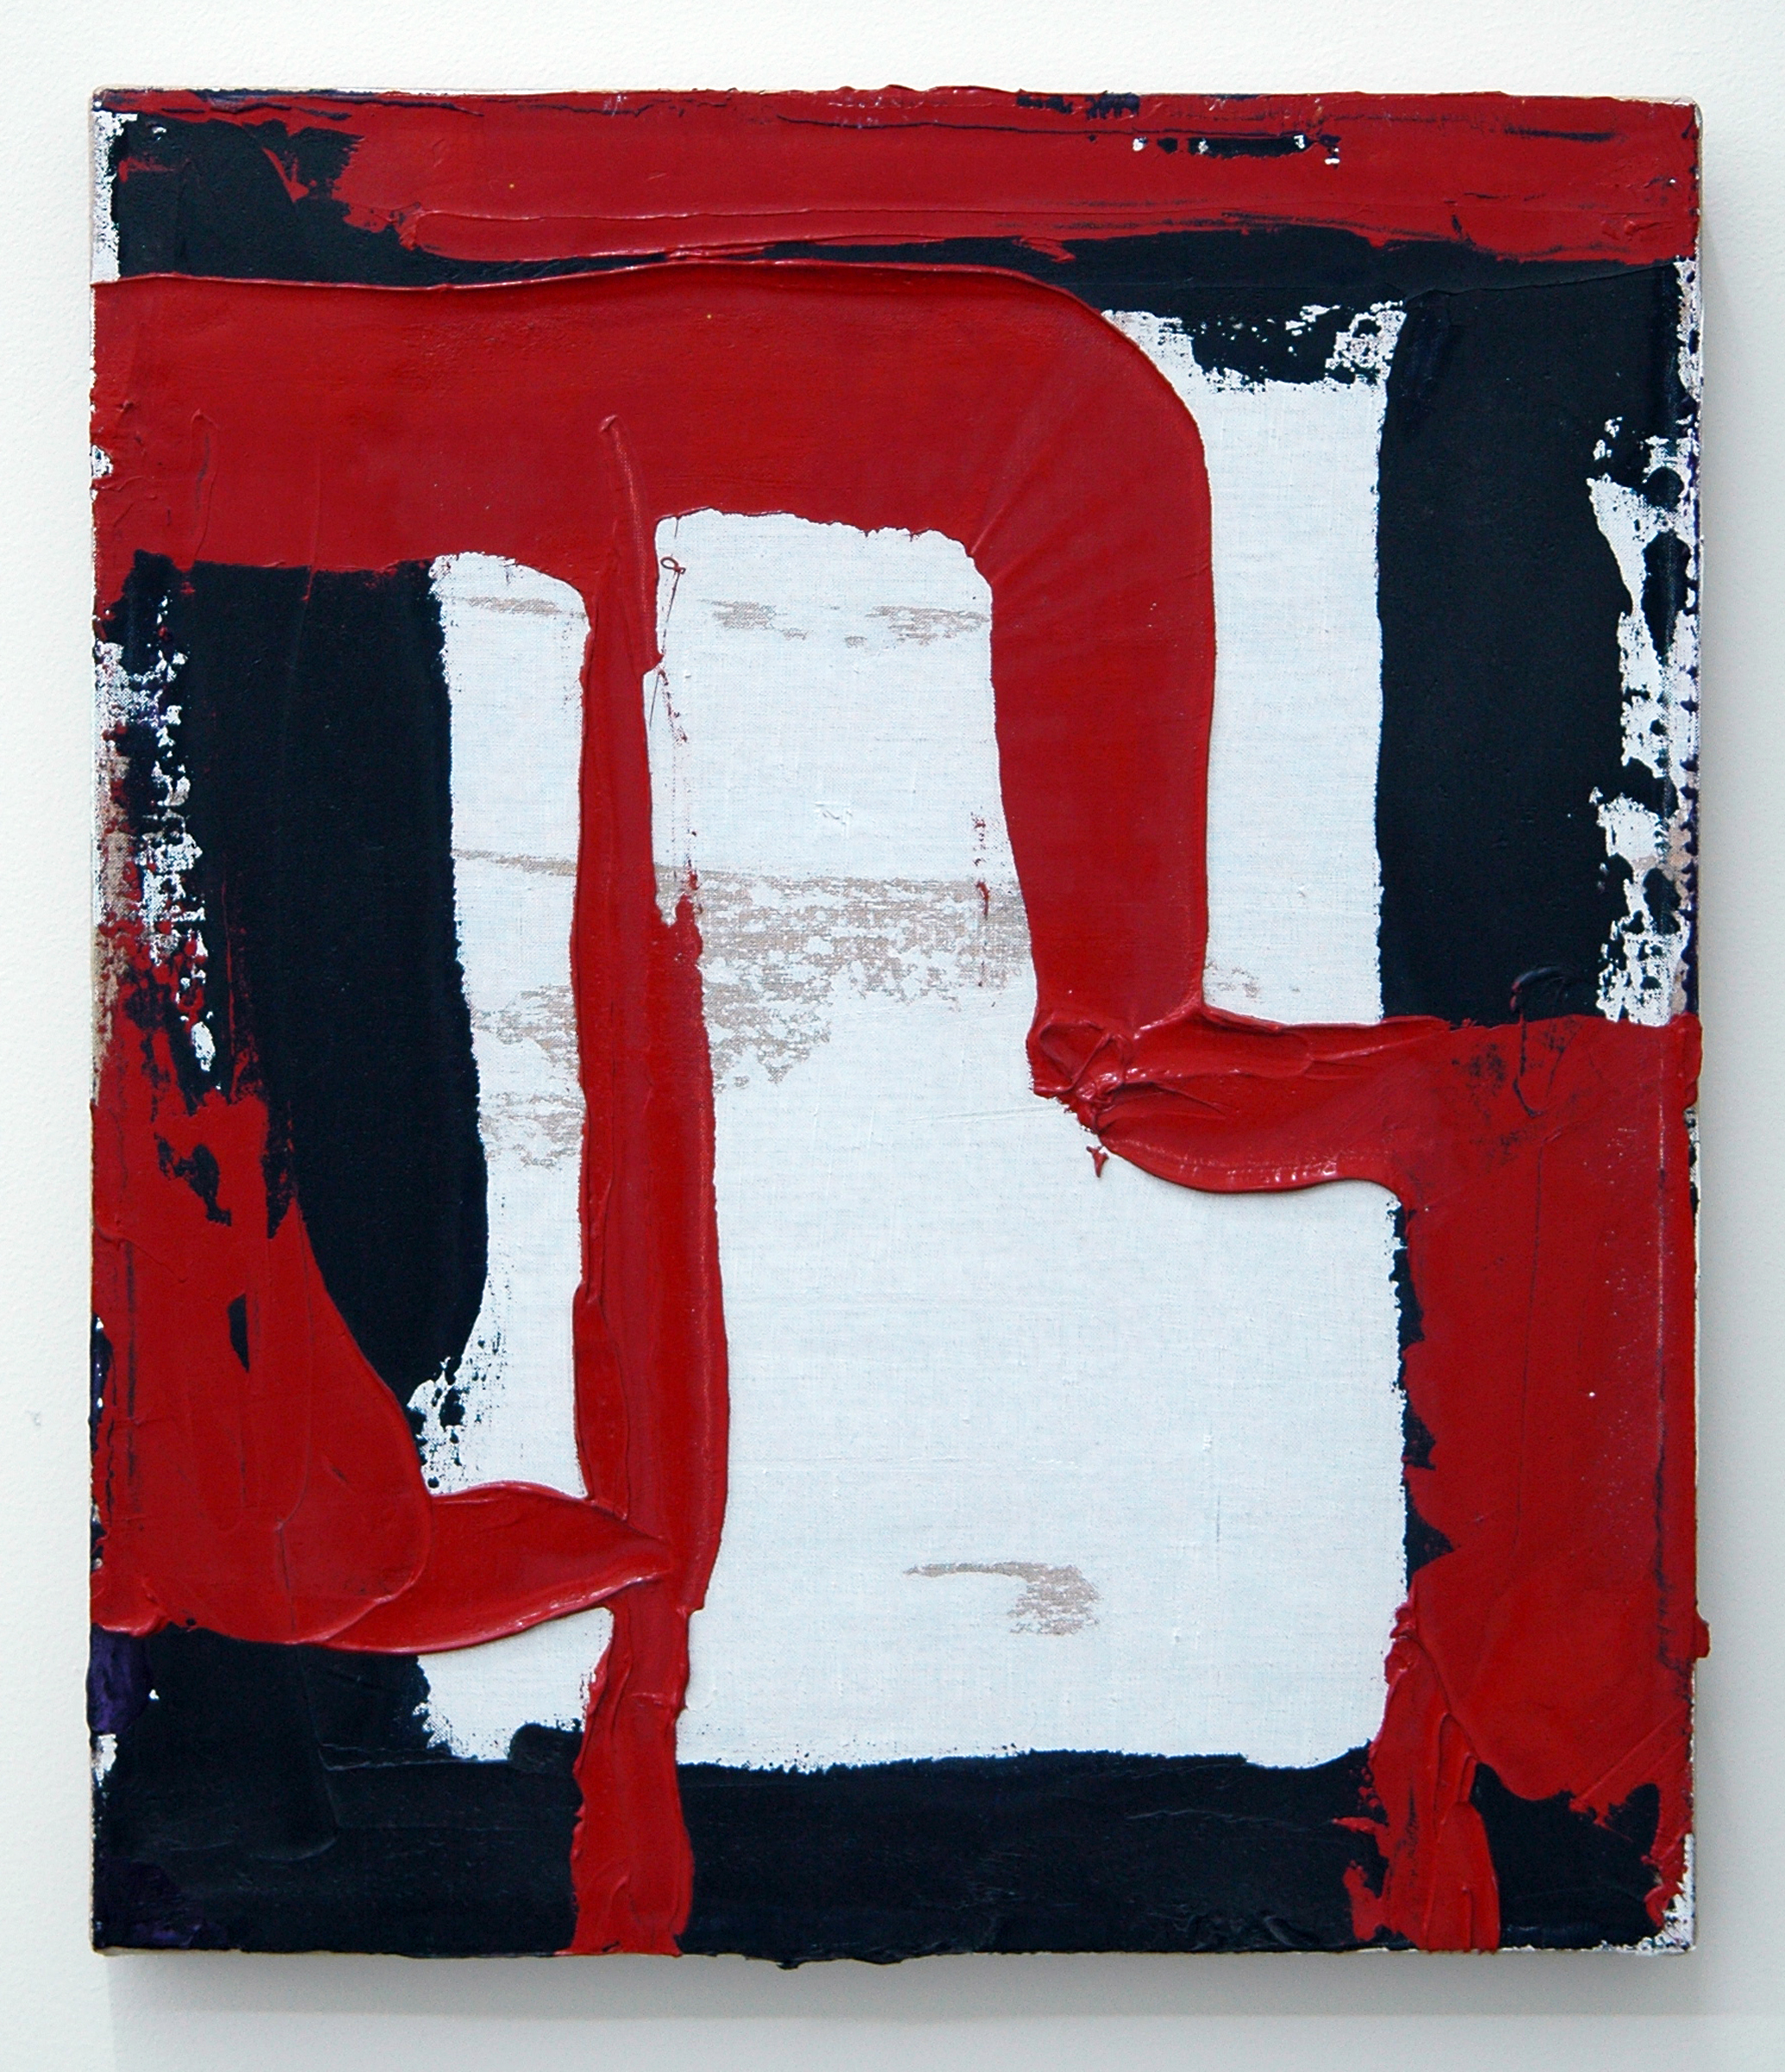   /SLASH/  Peter Kirkeby,&nbsp; Untitled,&nbsp; oil and rabbit skin glue on linen, 13" x 11", 2013 